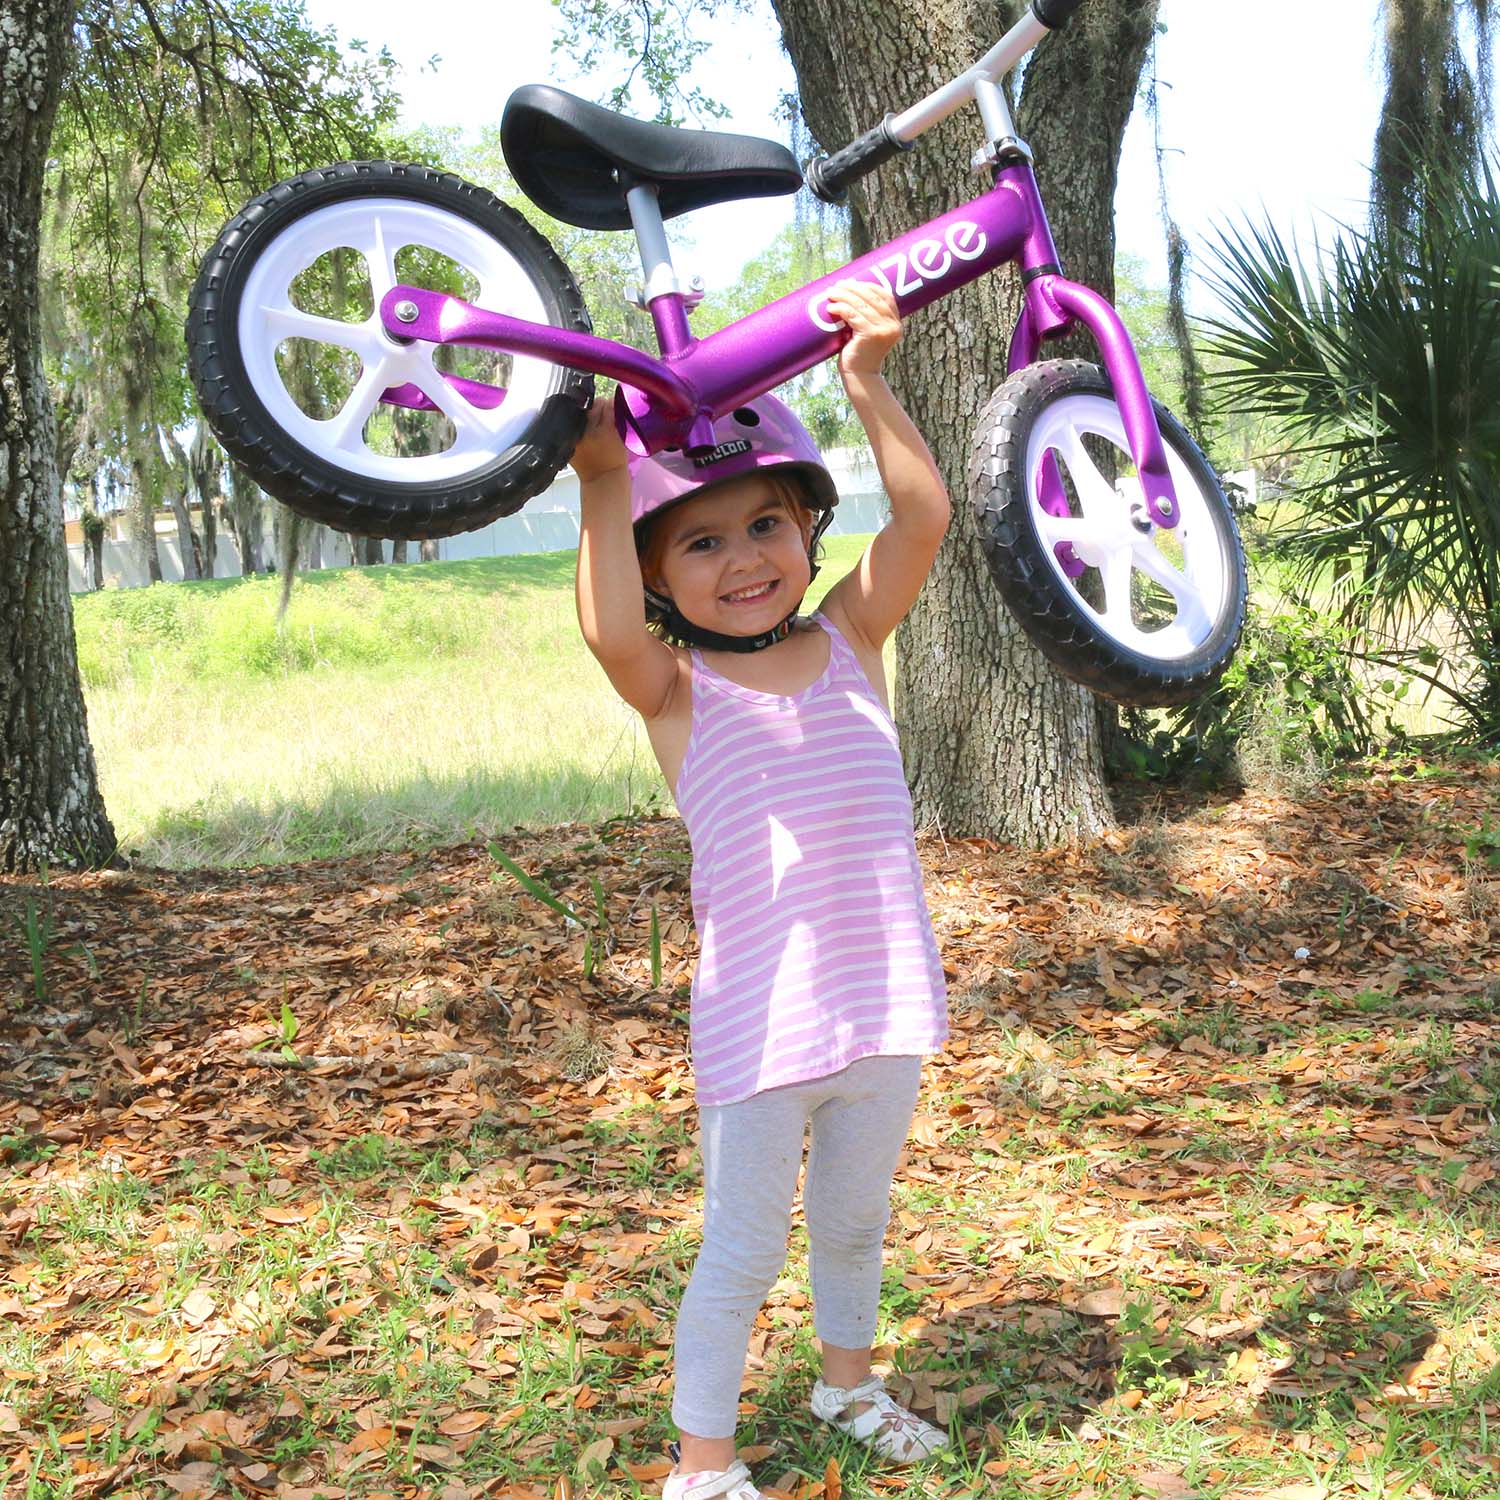 cruzee-balance-bike-purple-with-white-wheels-lift